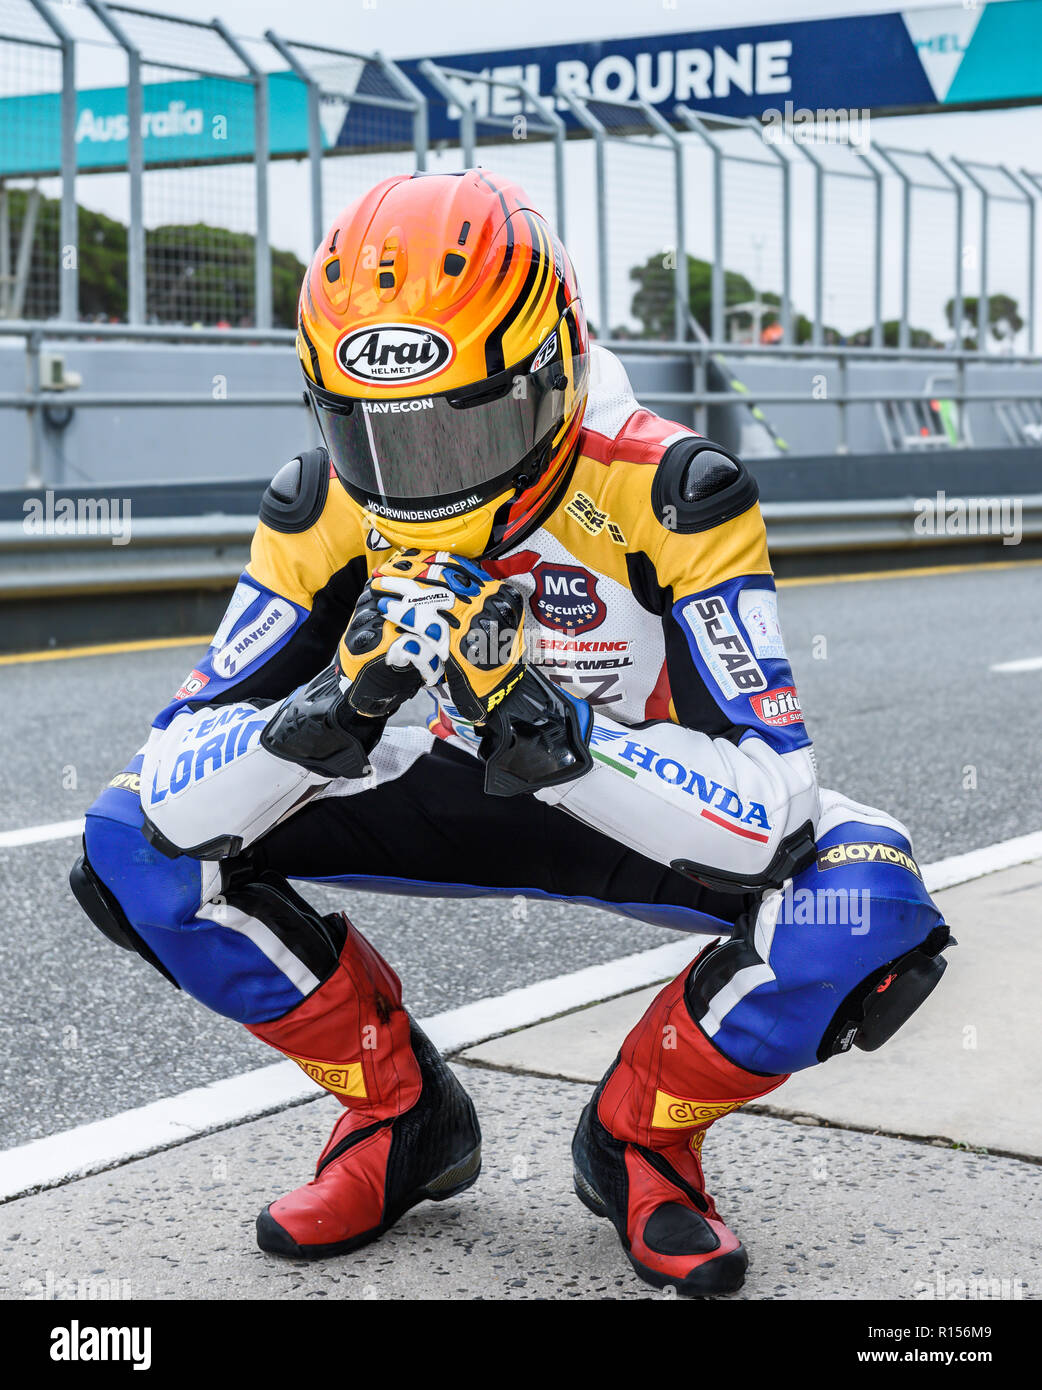 Motorcycle racer stretching on pit lane Stock Photo